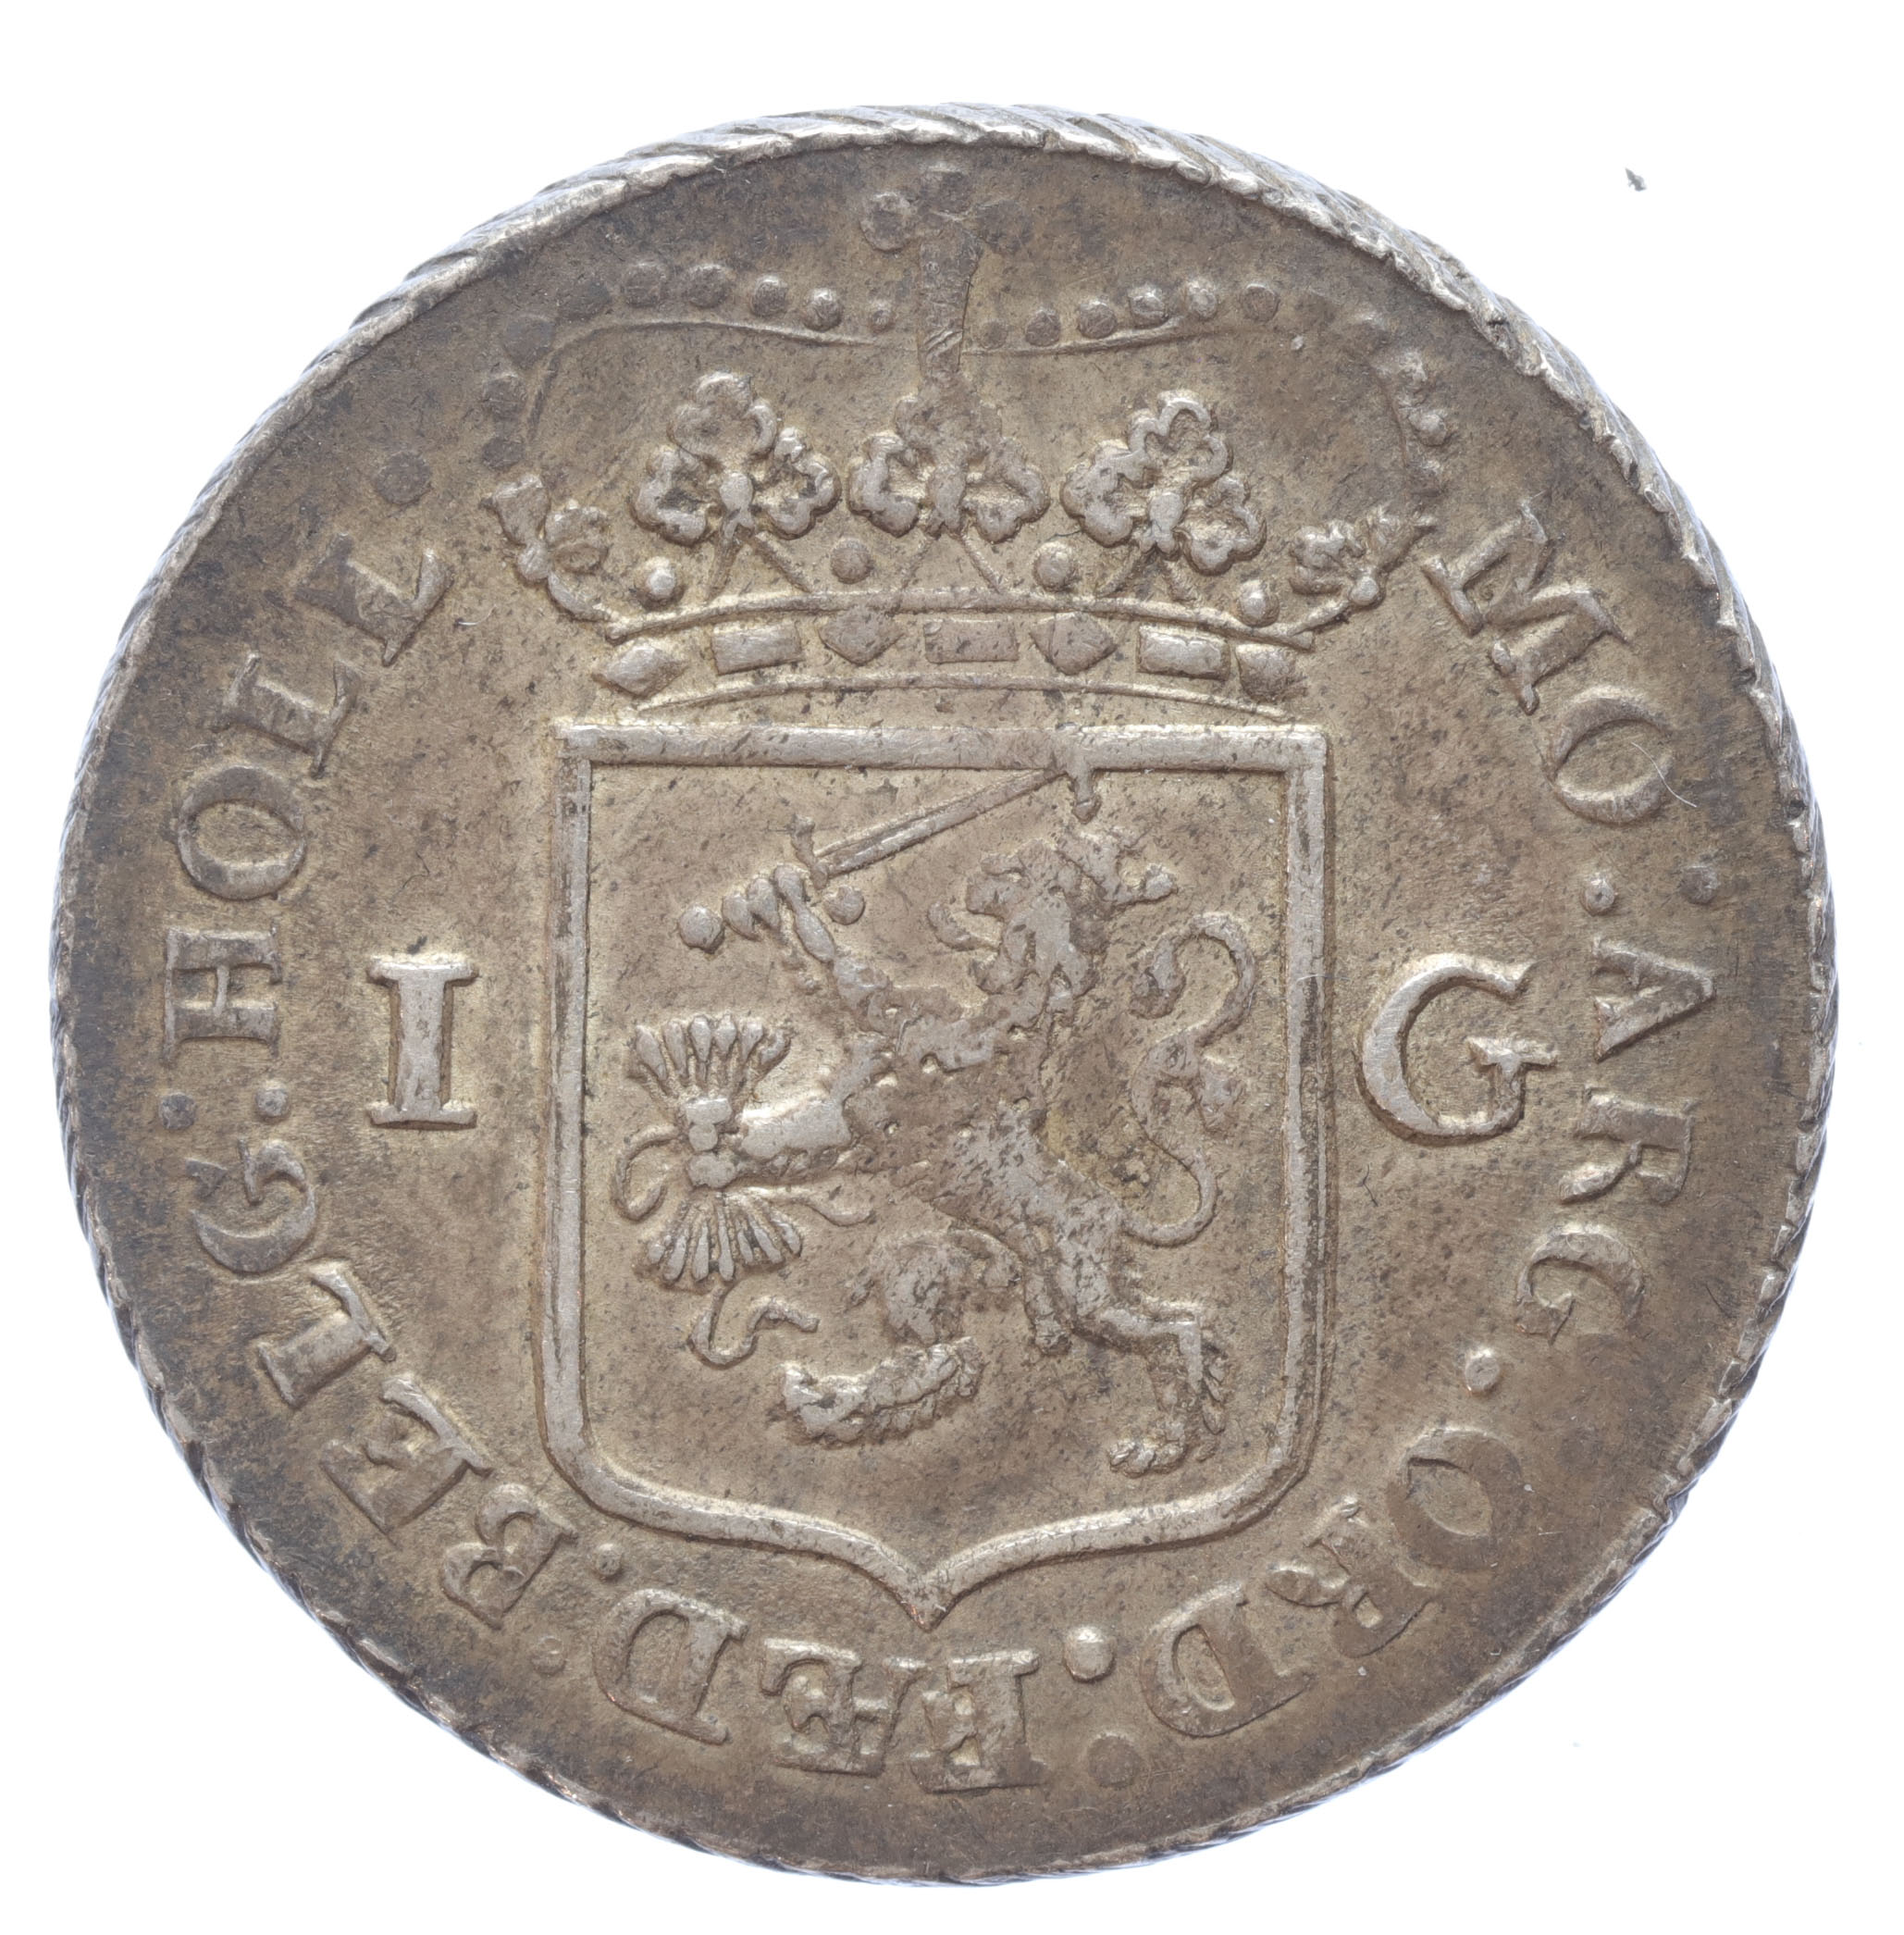 Holland. 1 Gulden. 1795